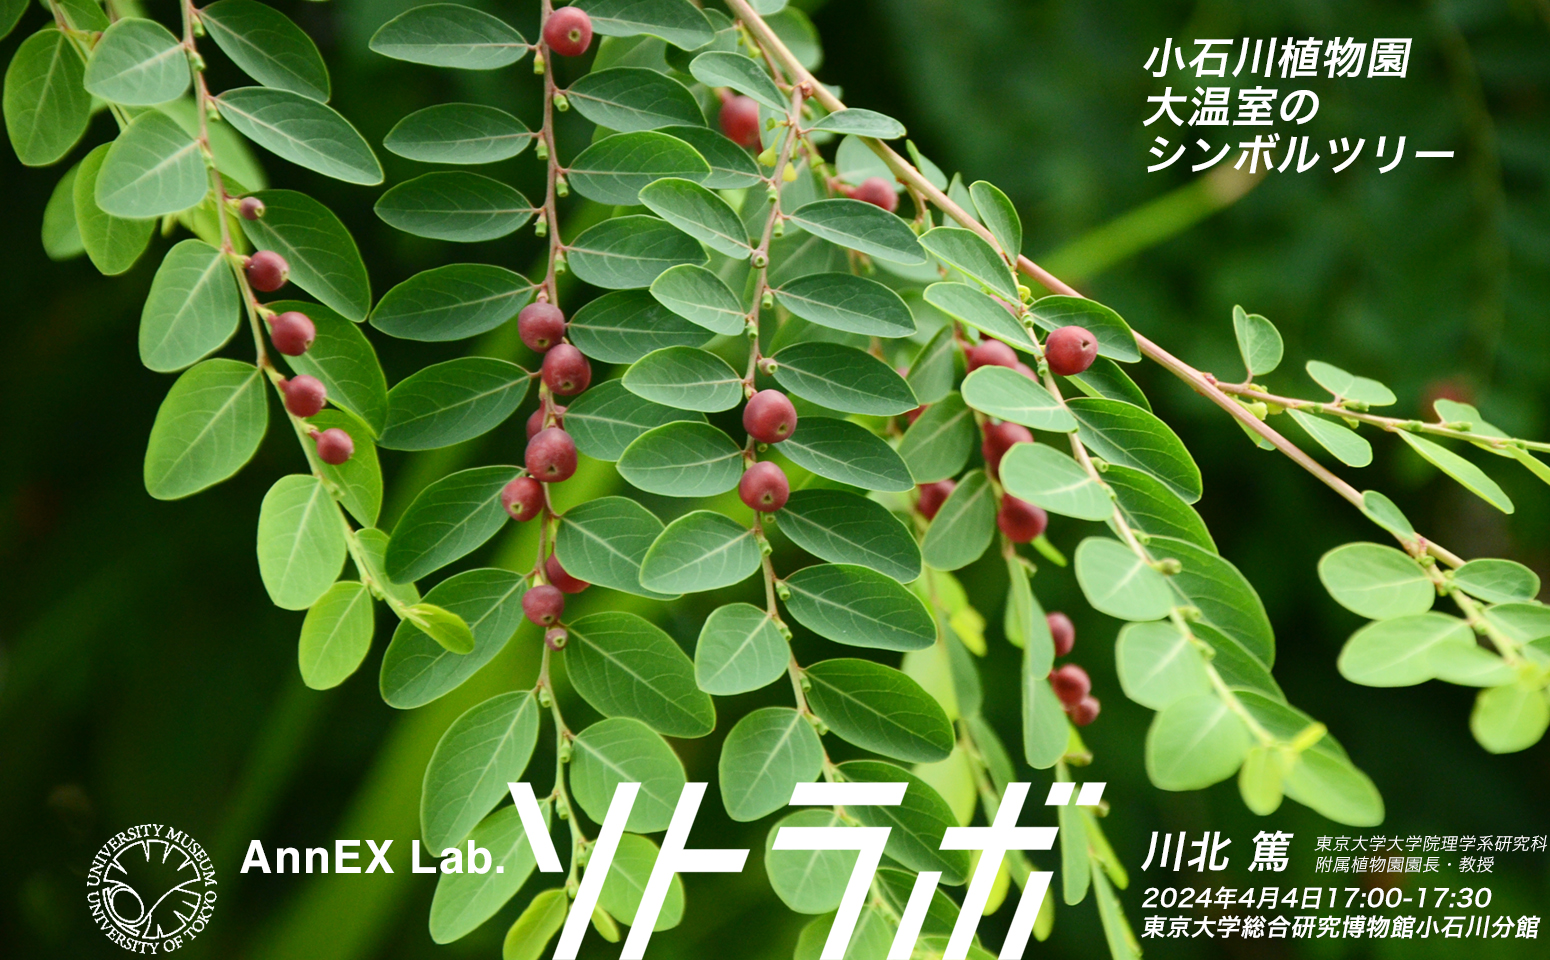 AnnEX Lab.　ソトラボ 東京大学総合研究博物館小石川分館館外ラボラトリー